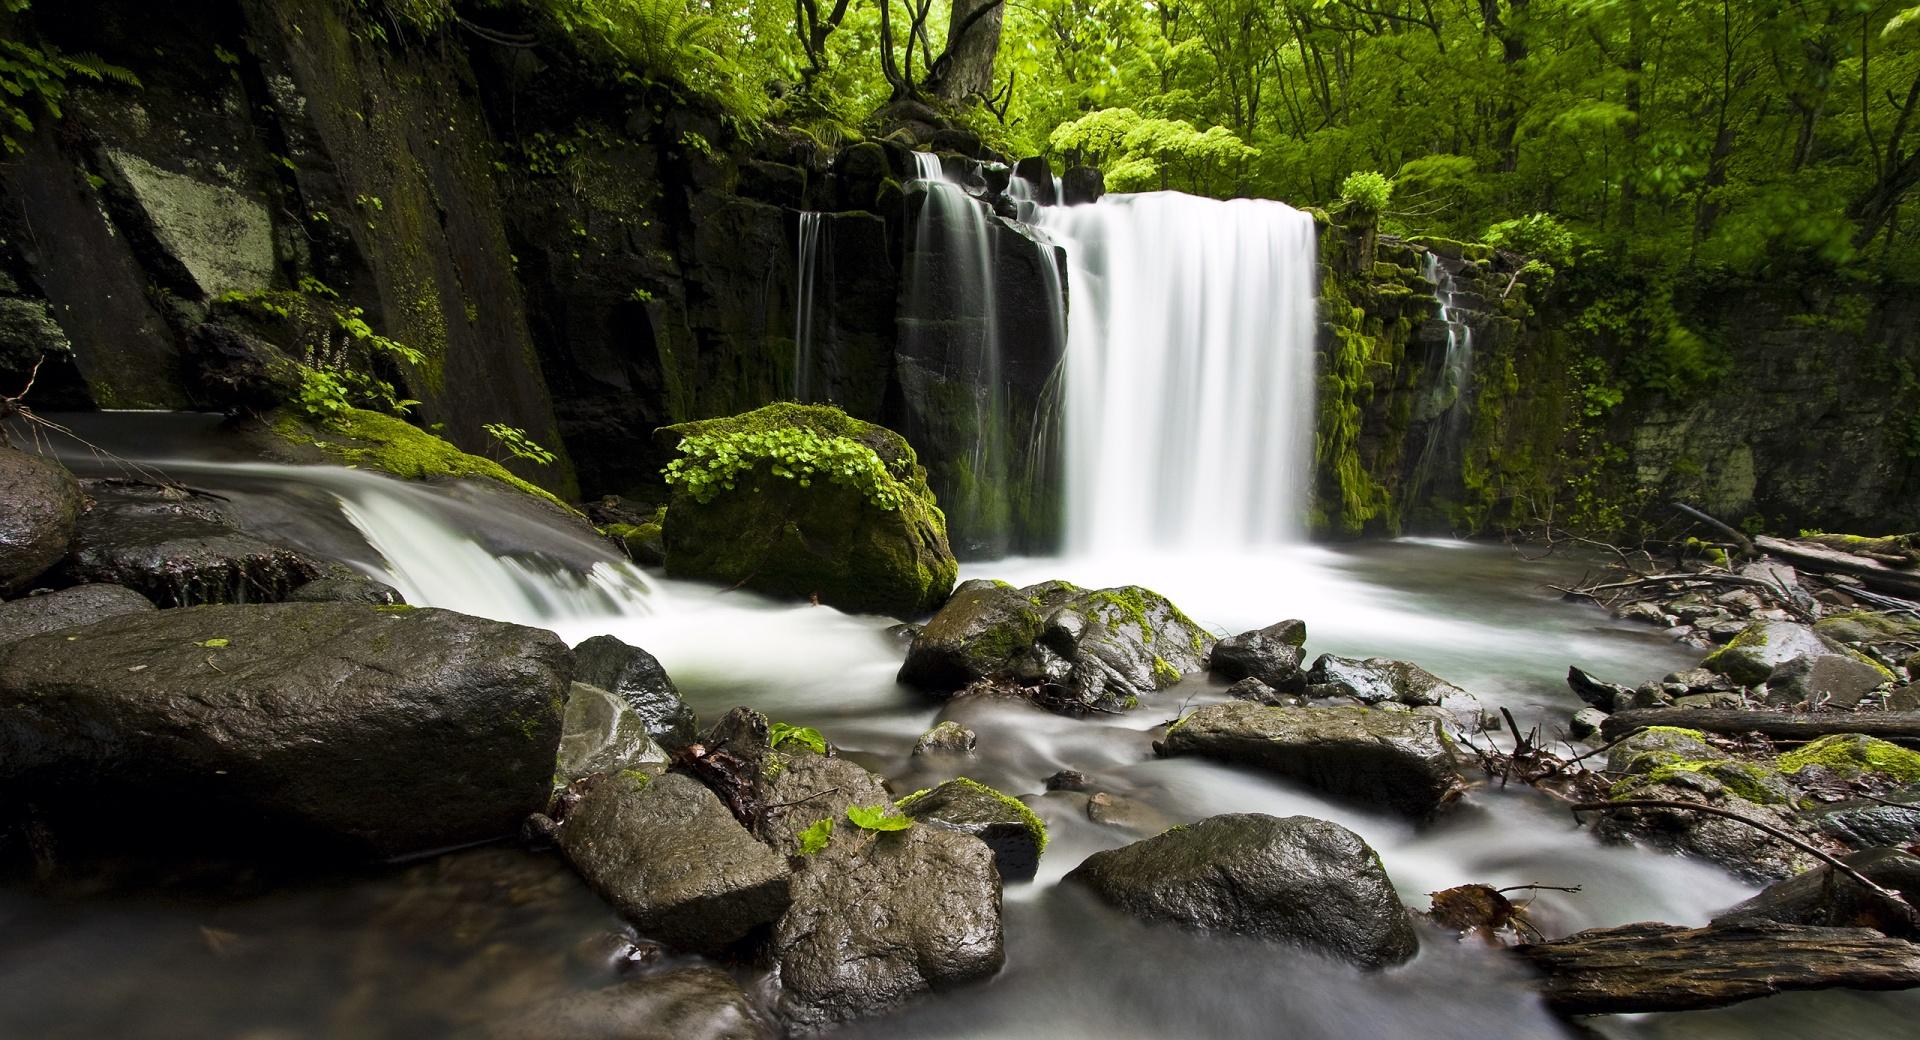 Beautiful Waterfall Scenery at 1024 x 1024 iPad size wallpapers HD quality